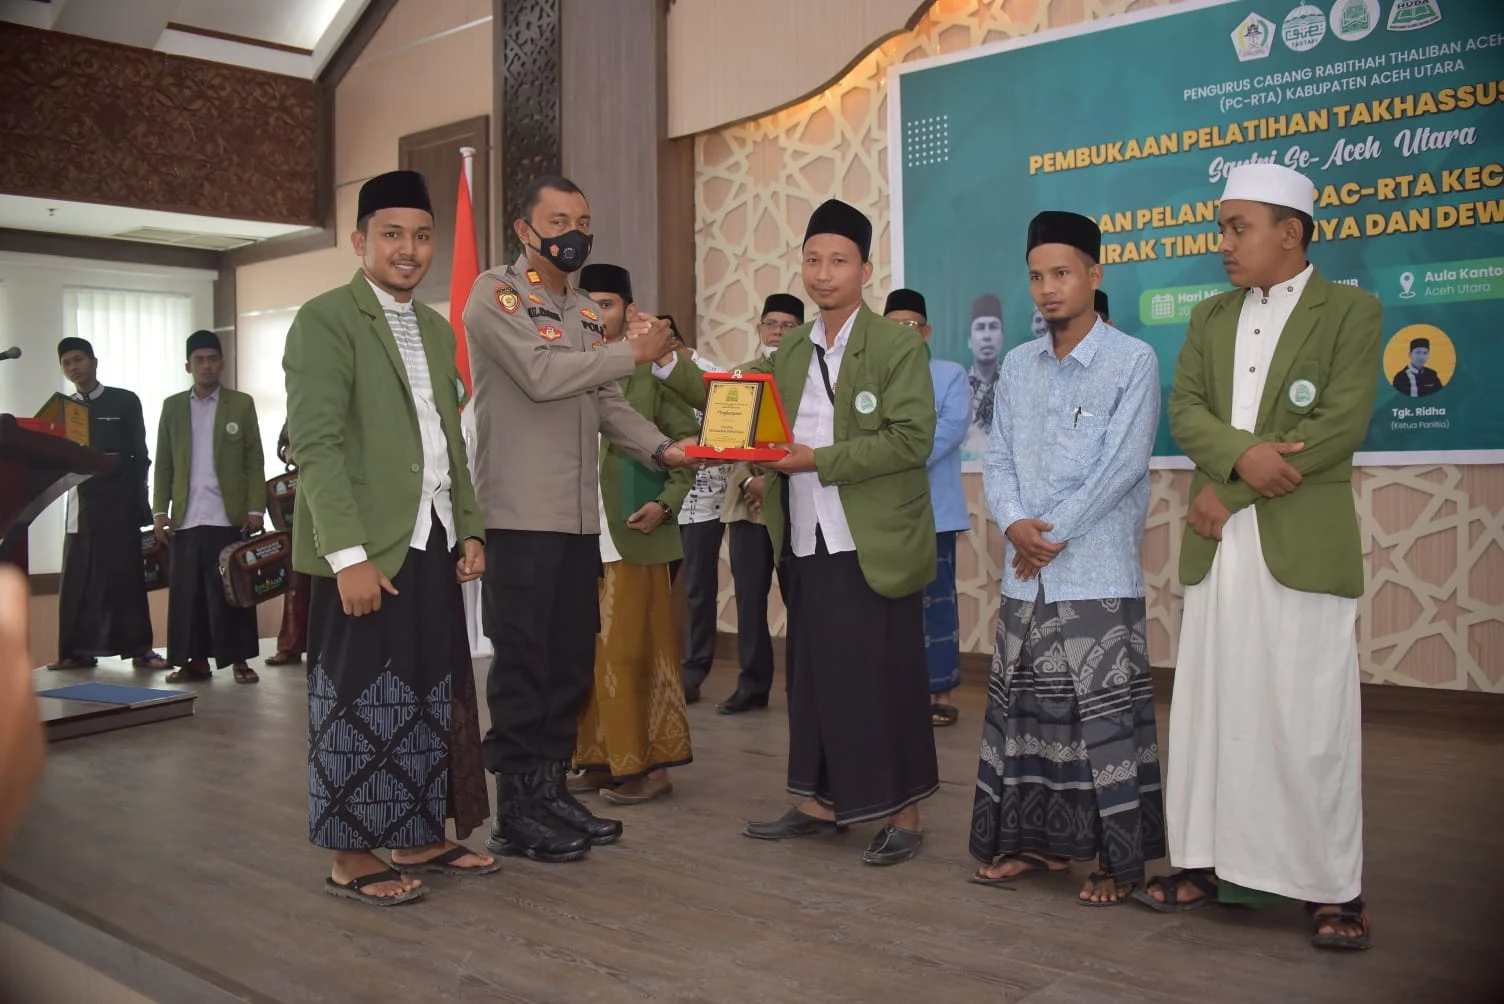 Tgk Abdullah Hasbullah Resmi Buka Pelatihan Takhasus Ilmu Faraid Bagi Santri Se-Aceh Utara